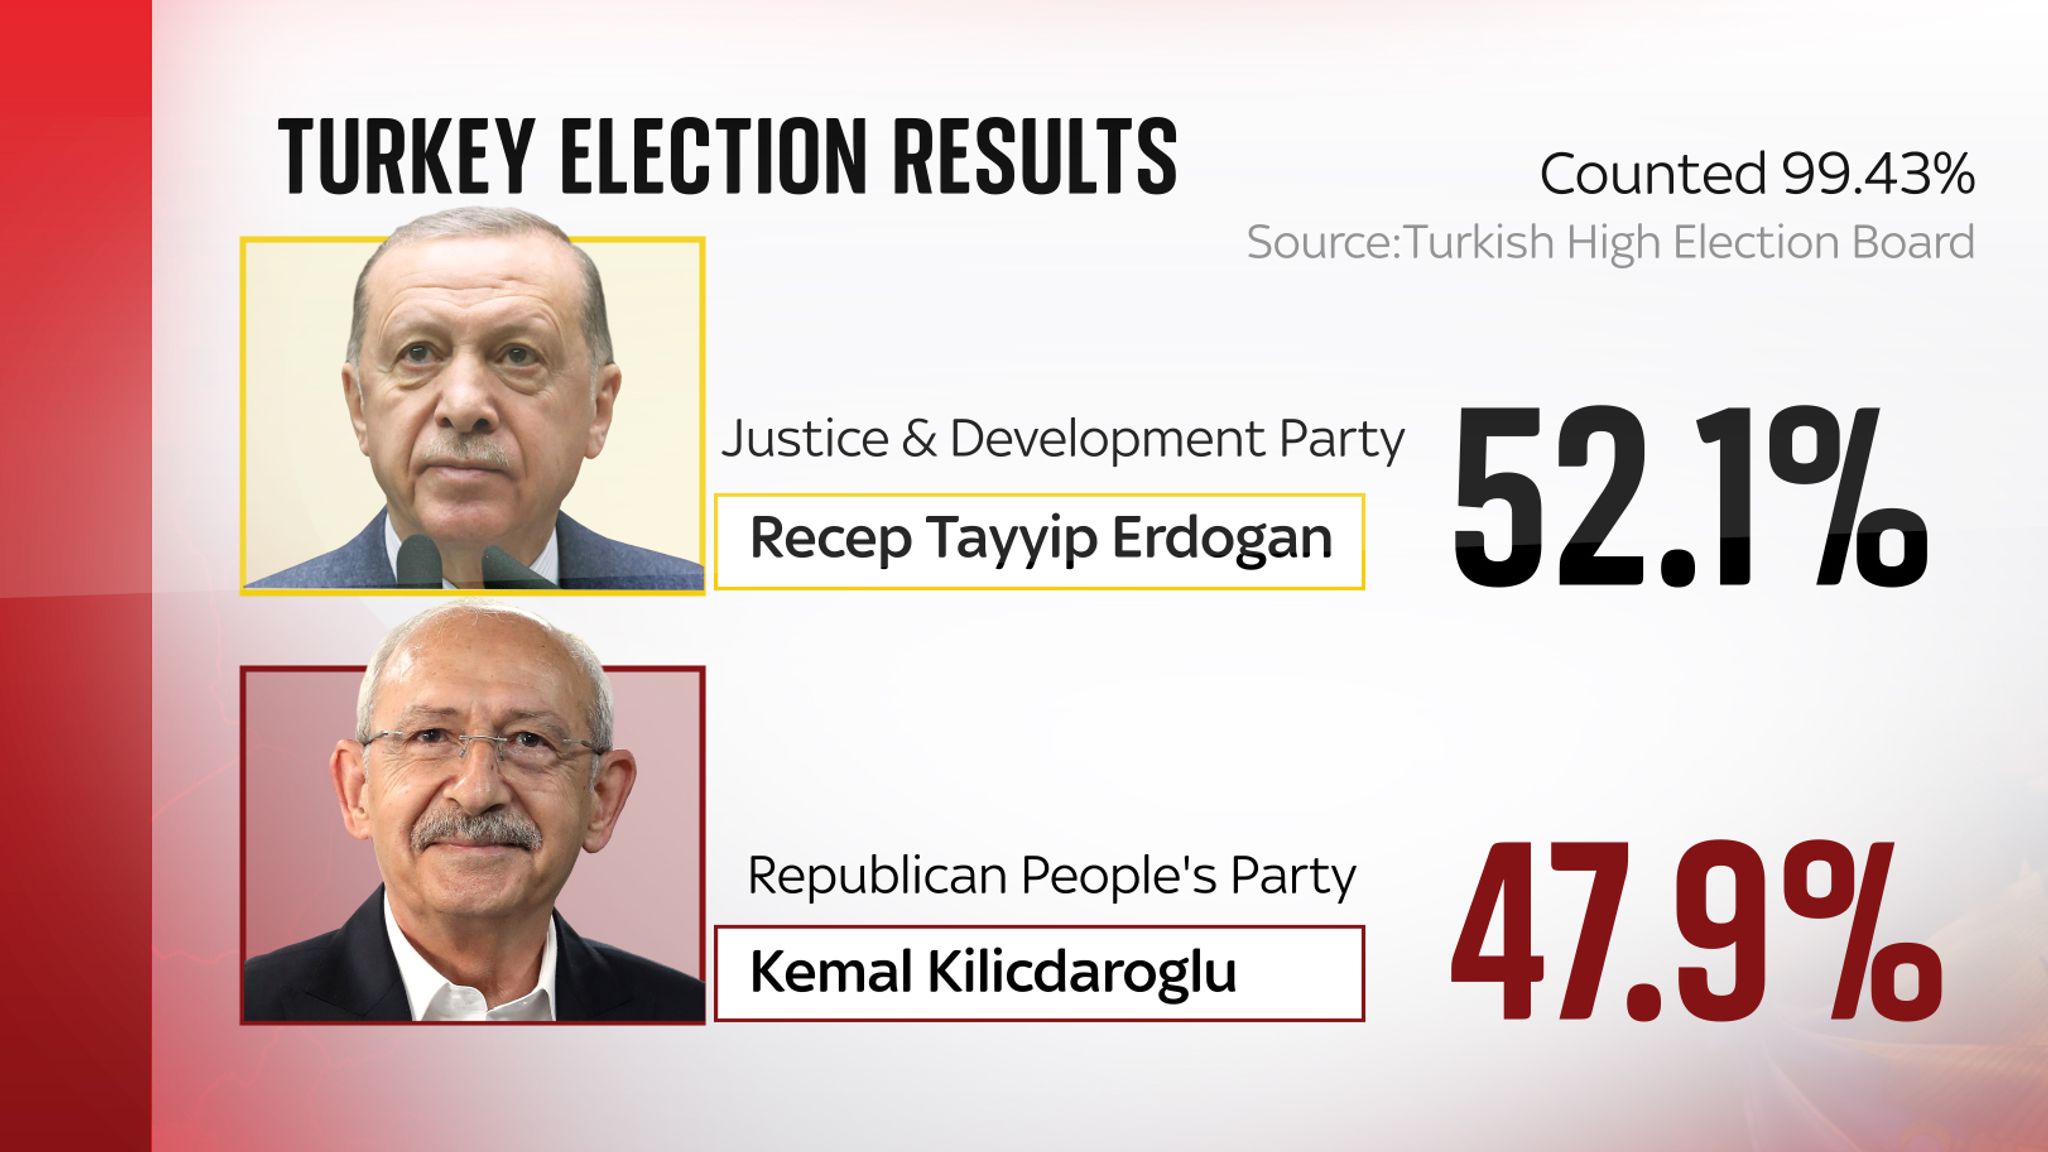 Turkey election President Erdogan declared winner with more than 52